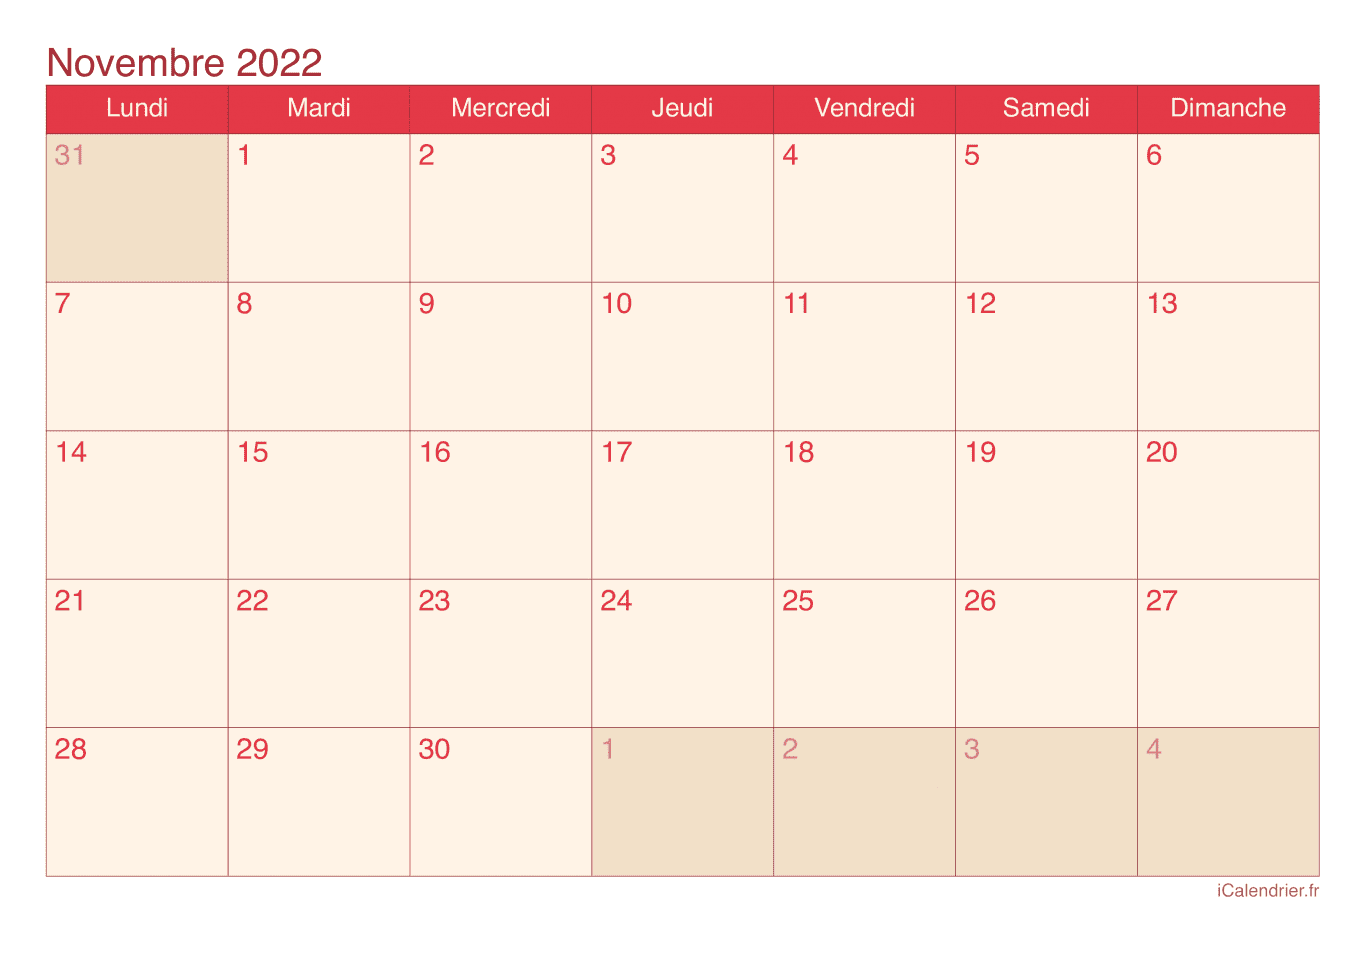 Calendrier de novembre 2022 - Cherry